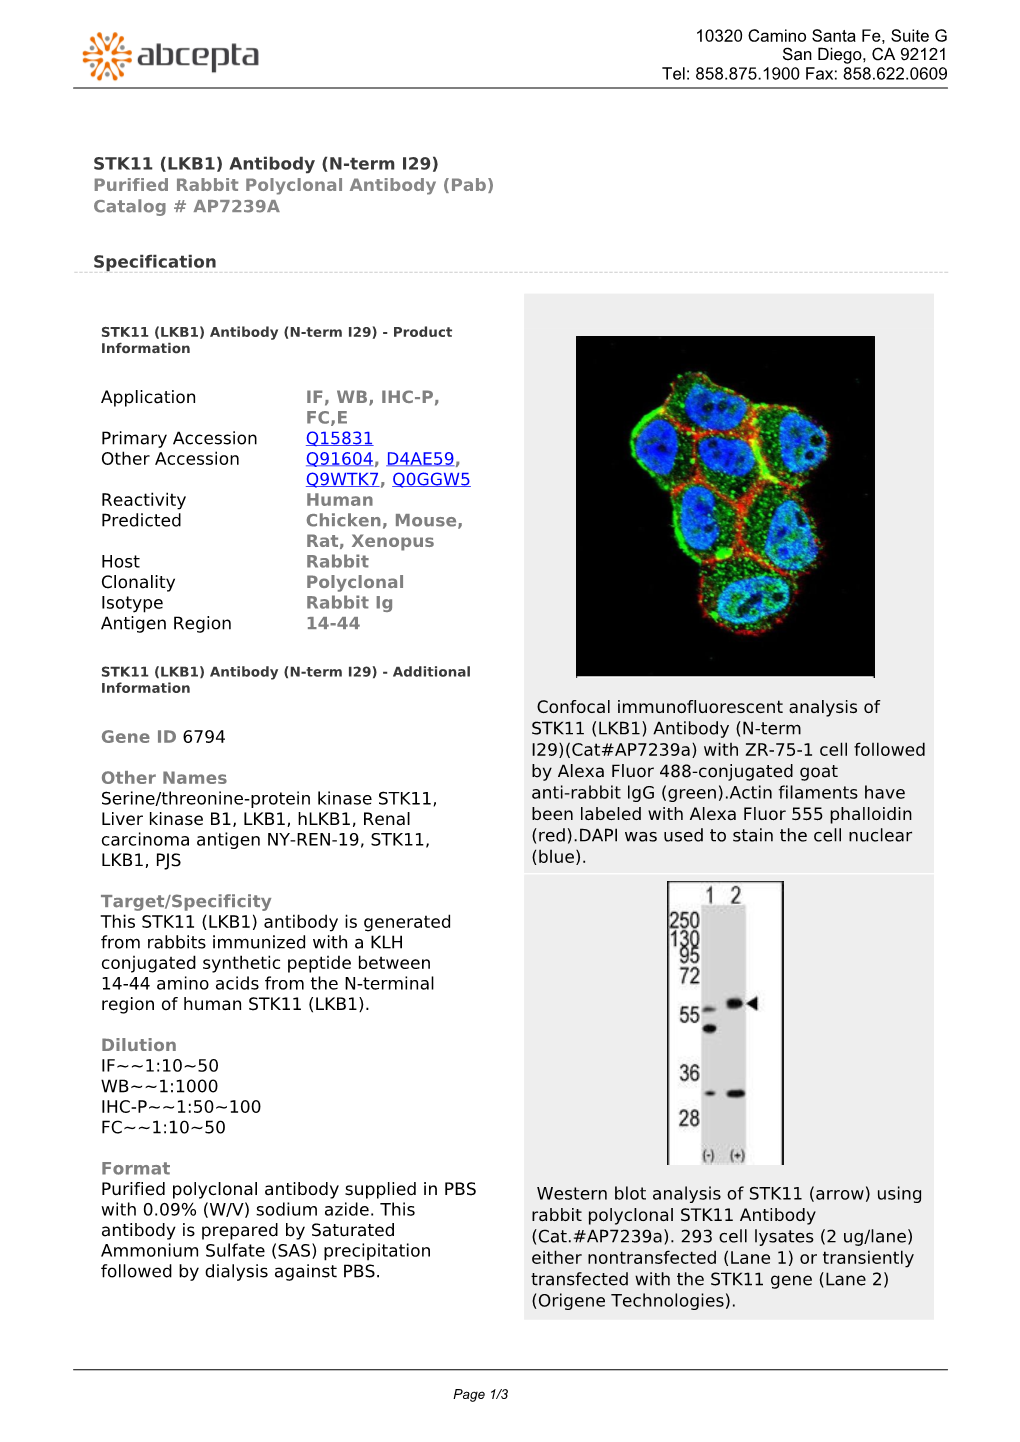 STK11 (LKB1) Antibody (N-Term I29) Purified Rabbit Polyclonal Antibody (Pab) Catalog # AP7239A